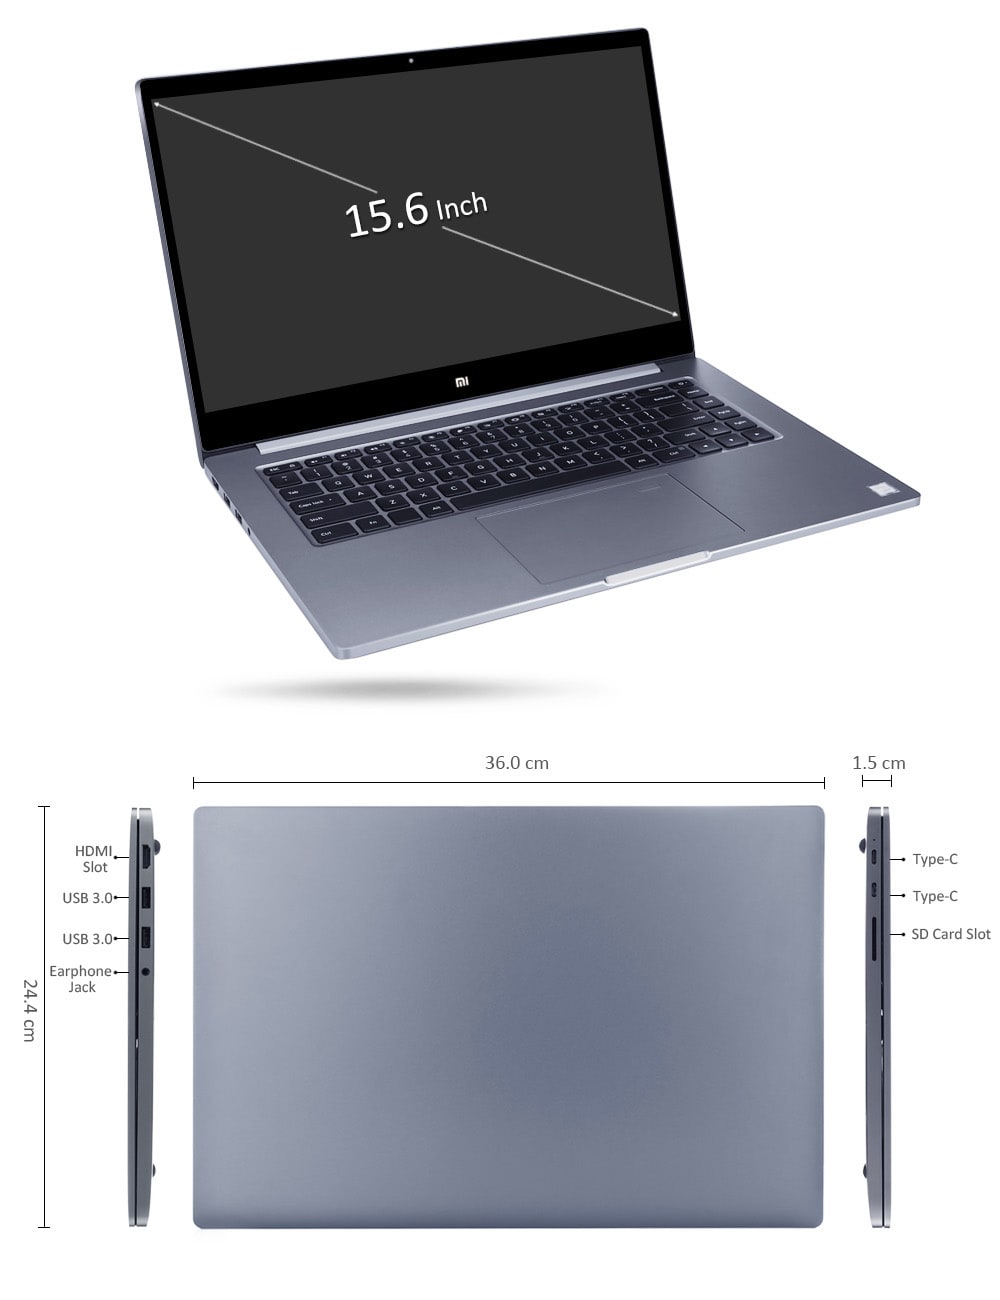 Технические характеристики Xiaomi Mi NoteBook Pro 2019